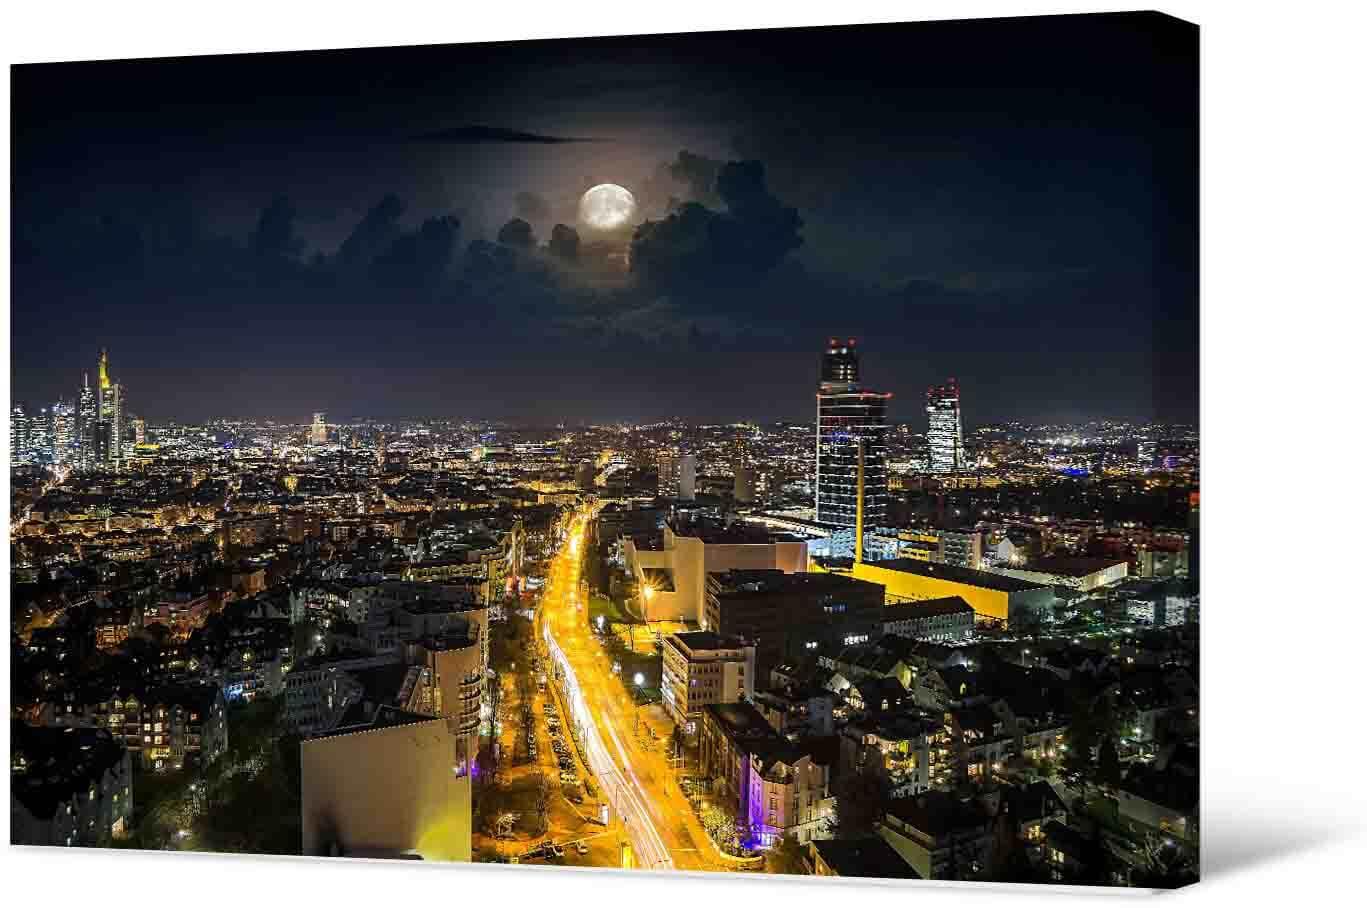 Photo painting on canvas - Night city urban landscape